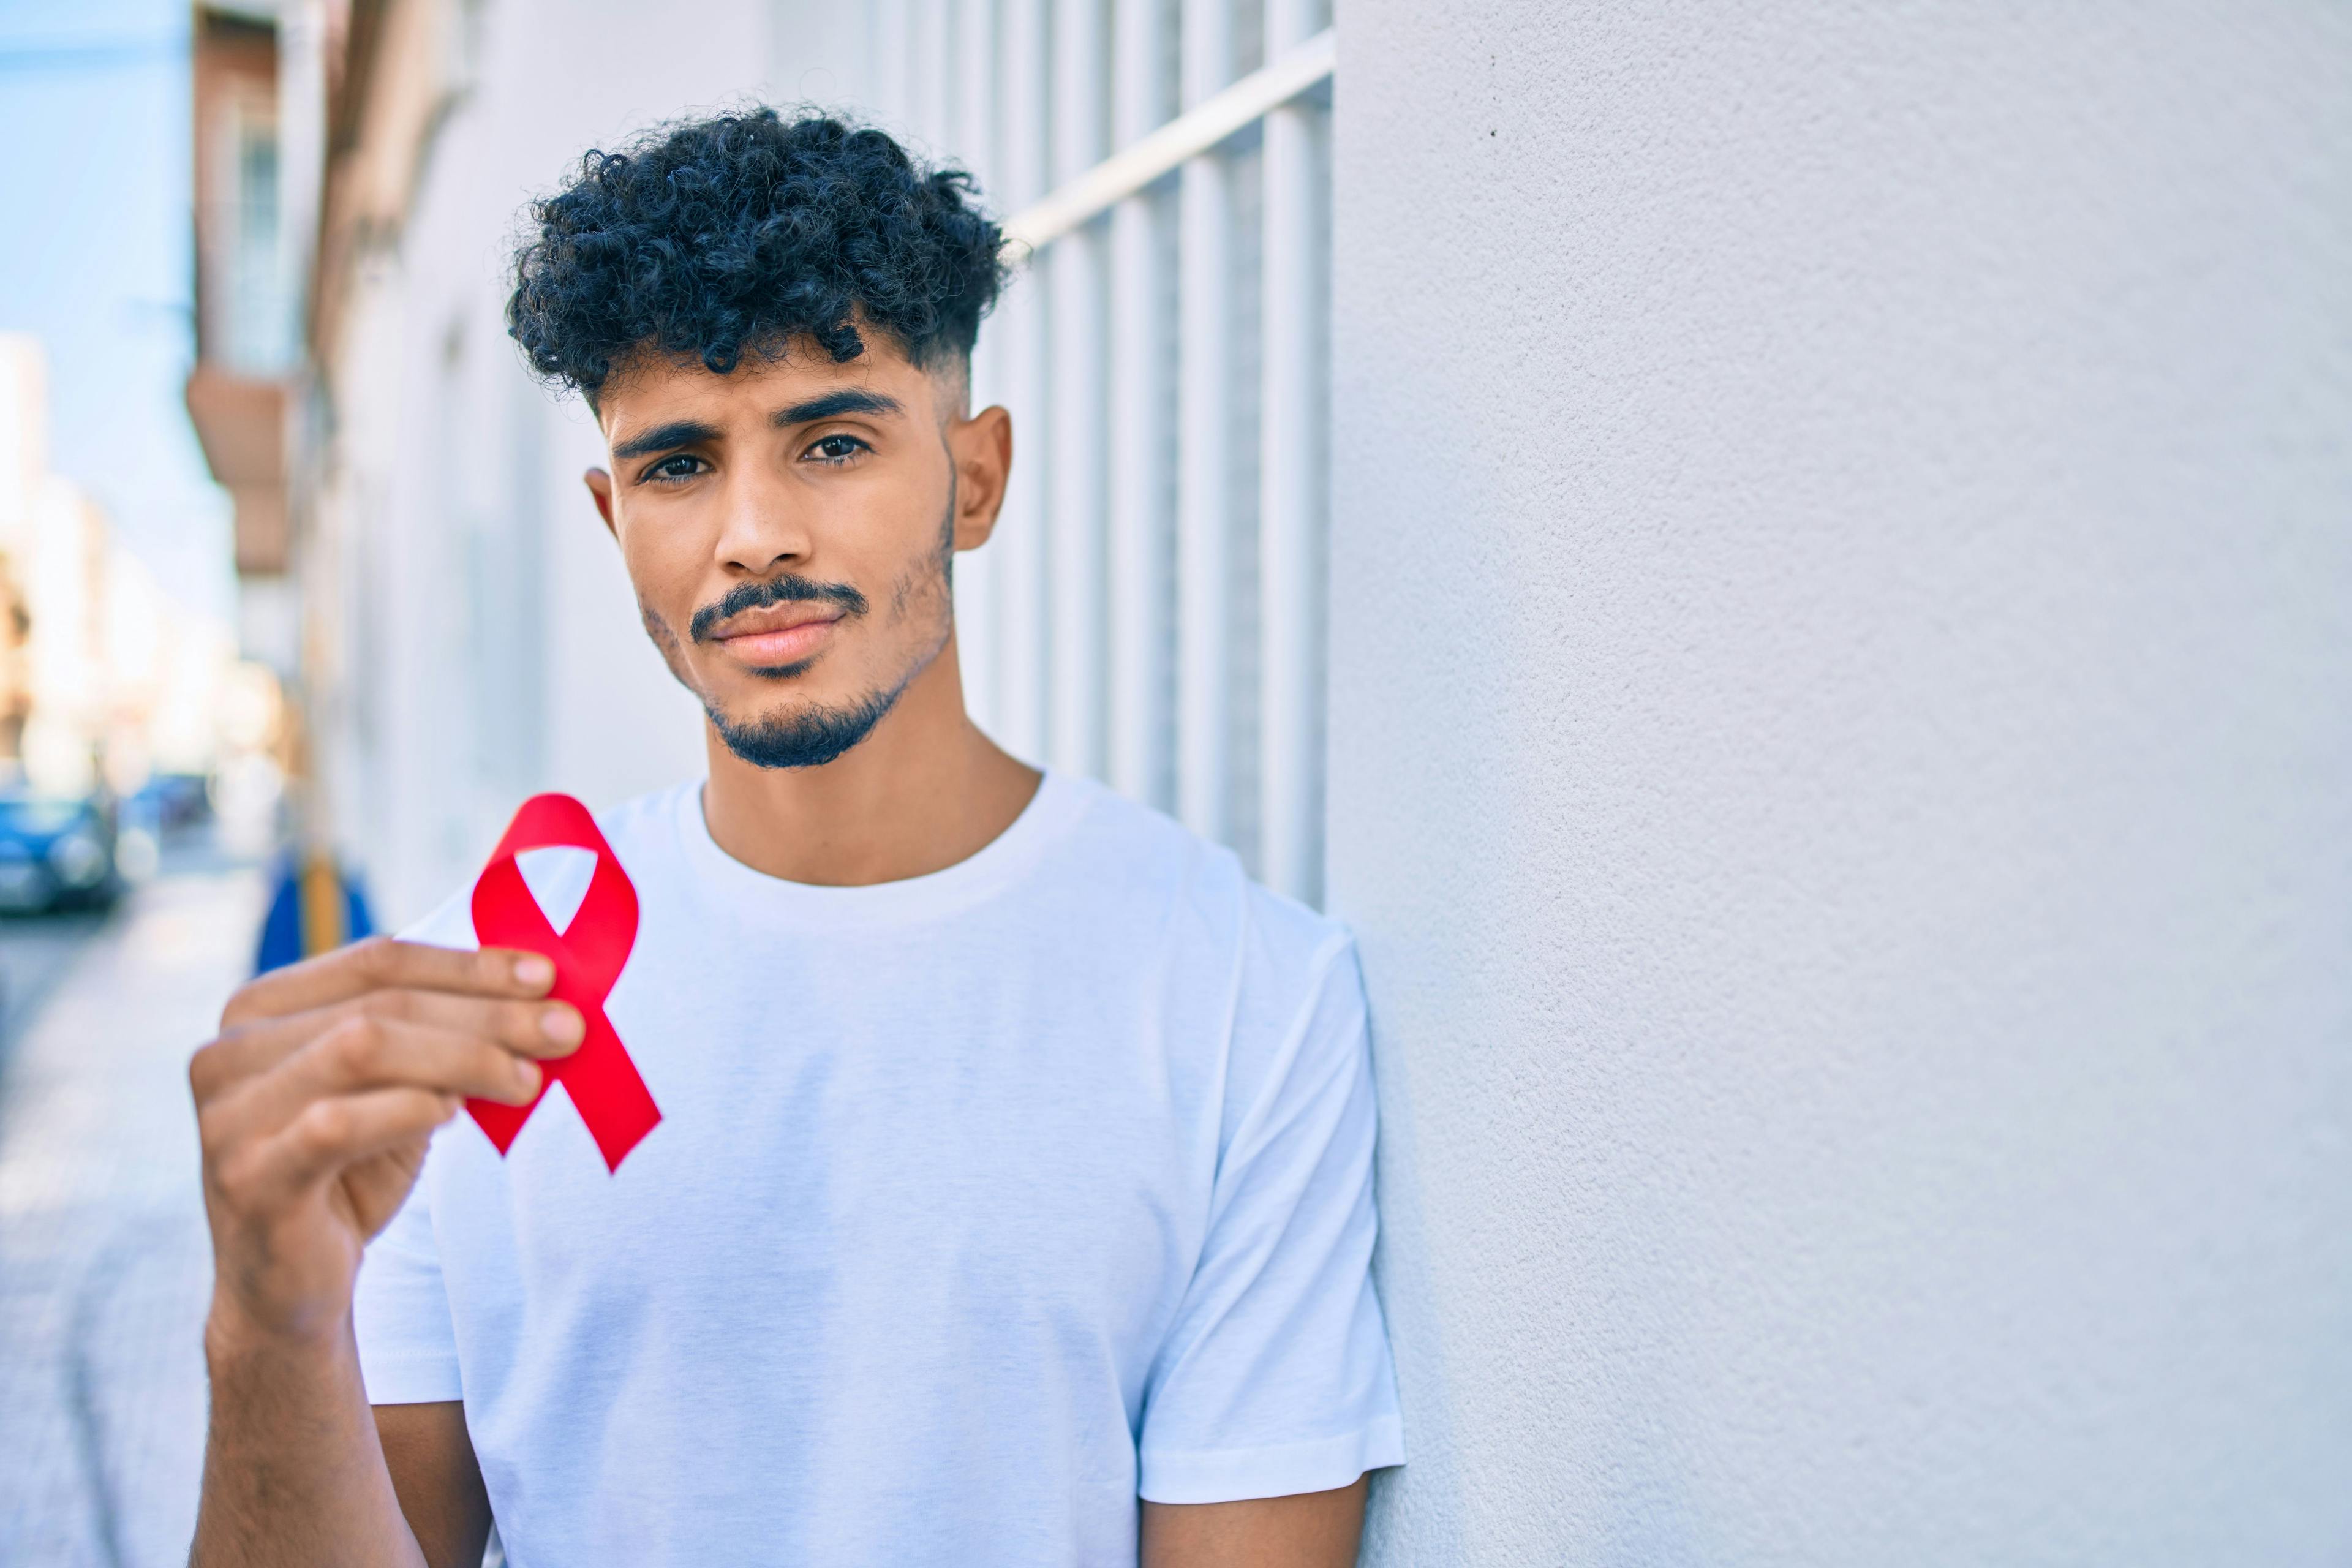 Young man holding HIV awareness ribbon | Image credit: Krakenimages.com - stock.adobe.com